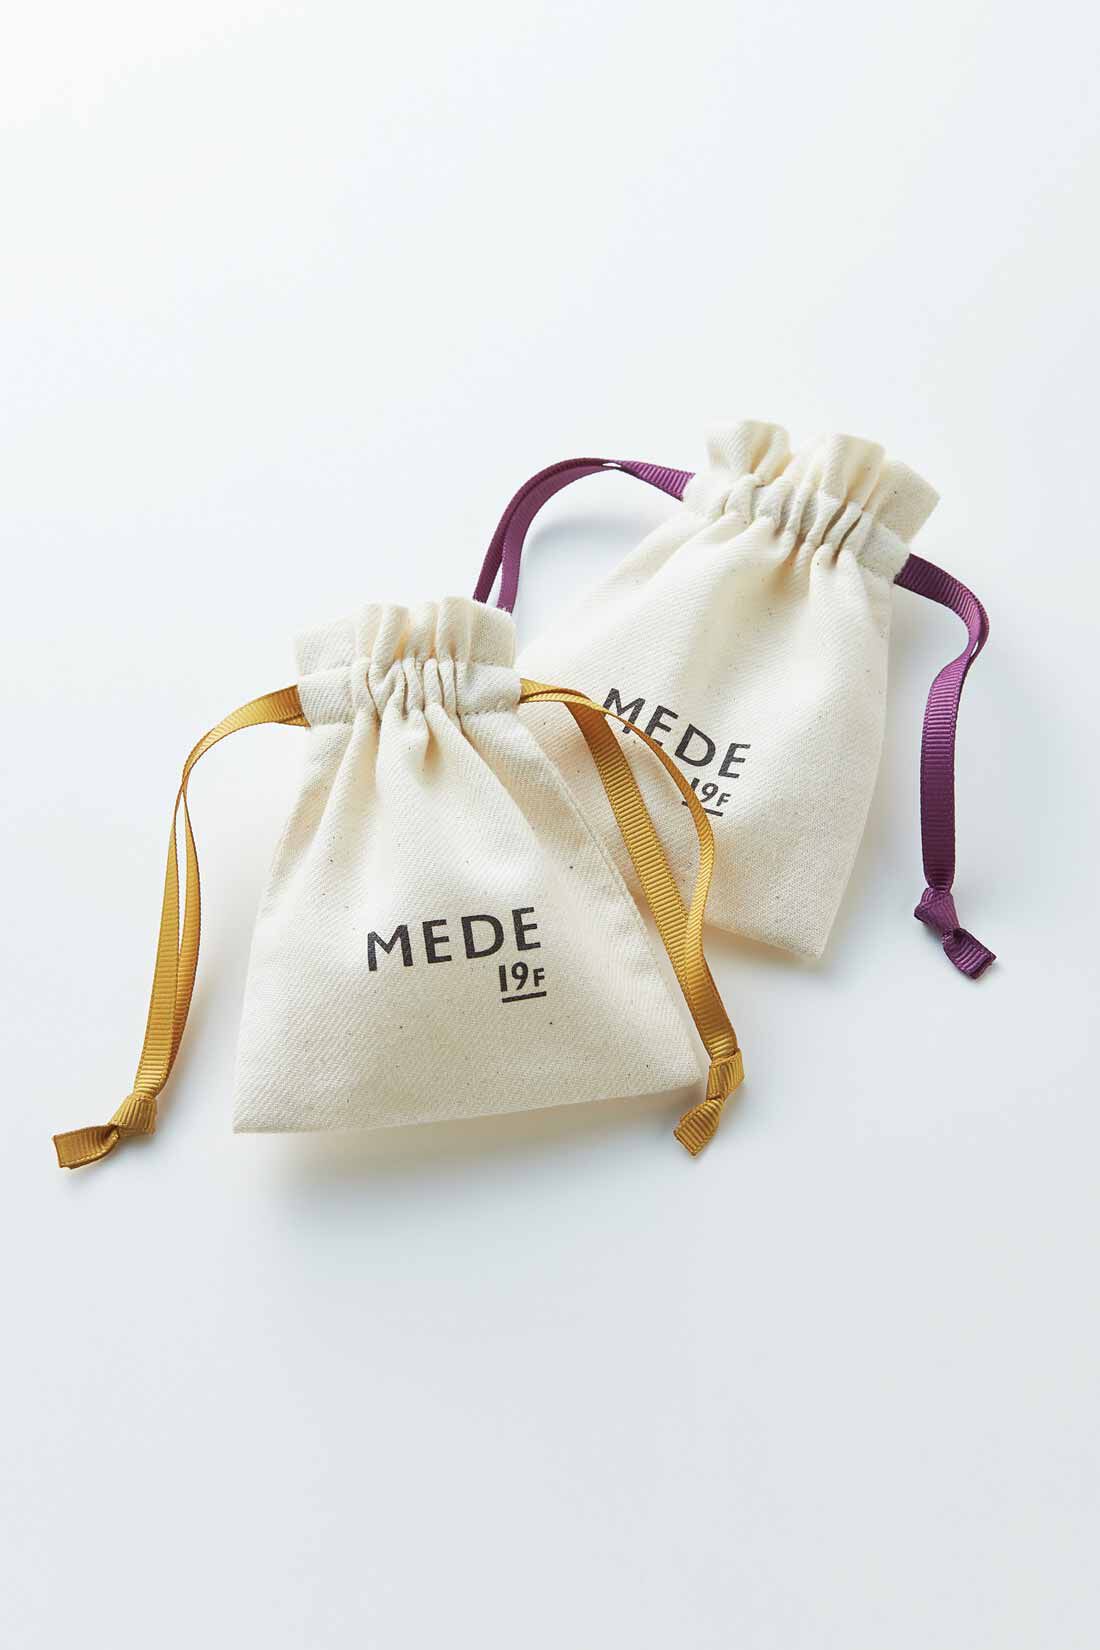 MEDE19F|YPAC for MEDE19F　フランス製陶器ボタンイヤリング type.03|MEDE19Fオリジナルきんちゃくに入れてお届けします。